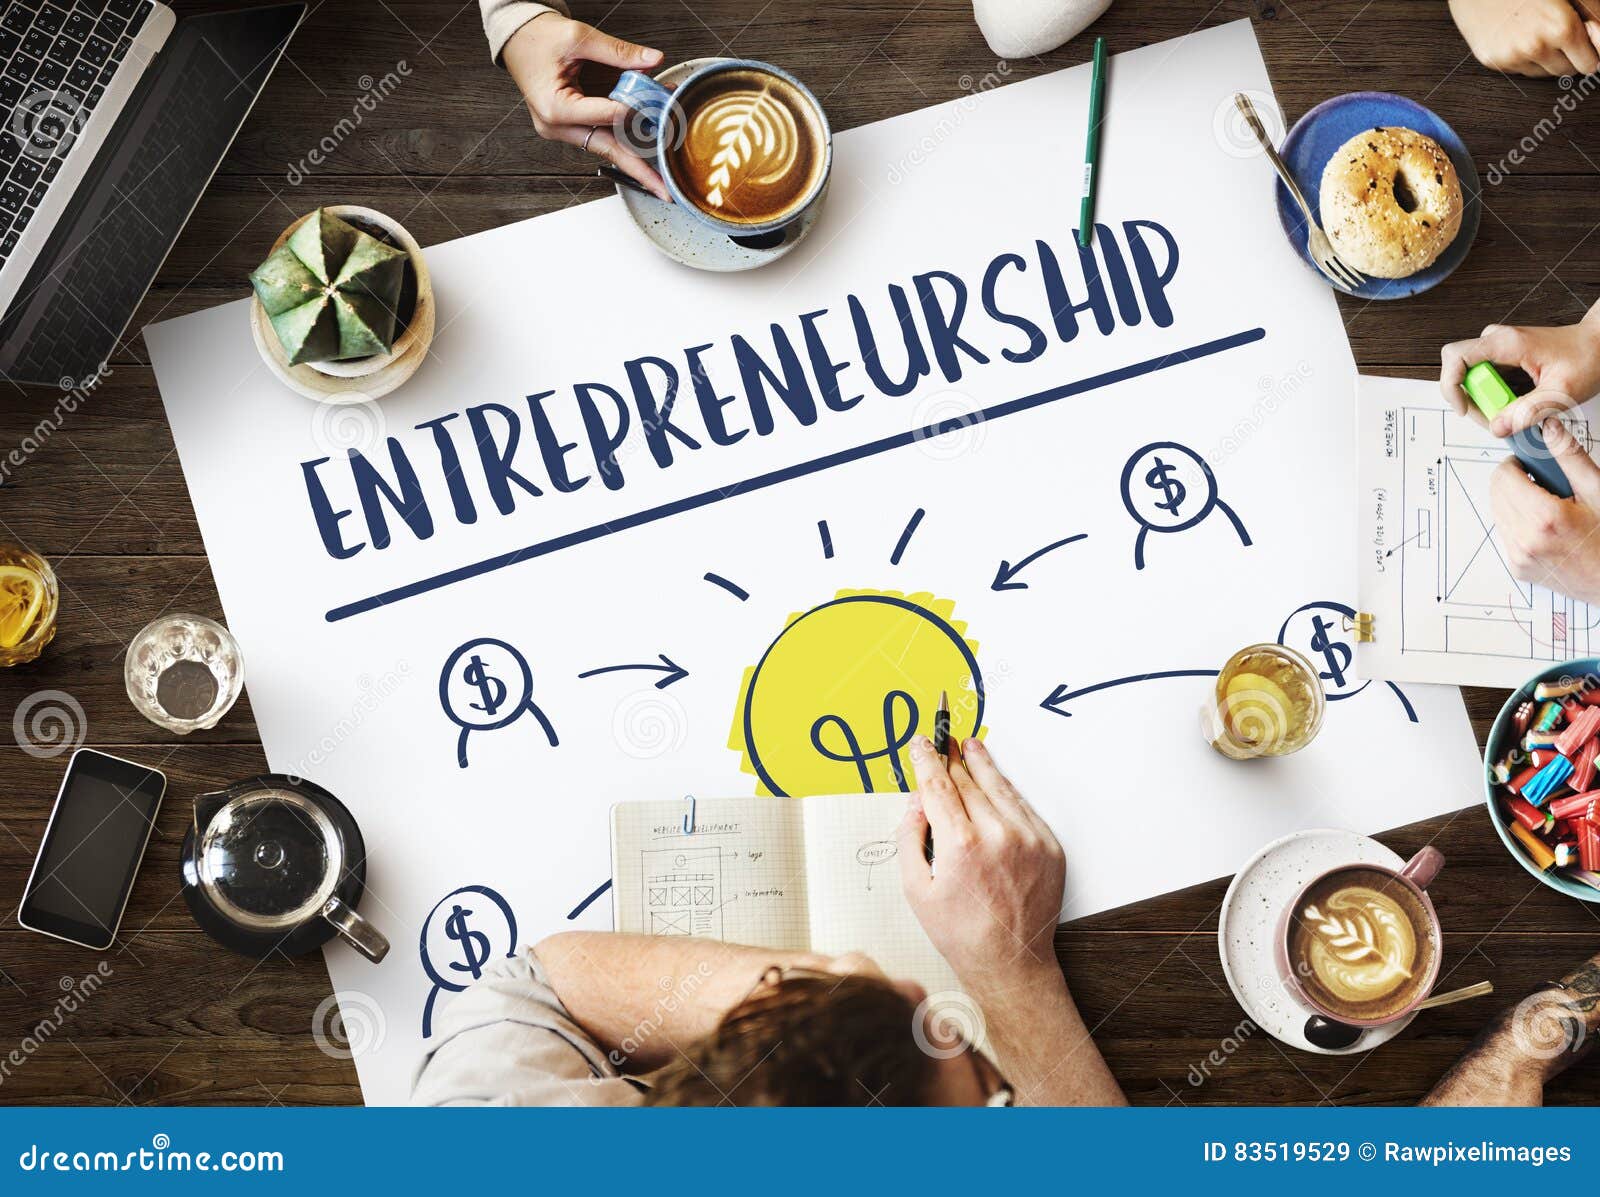 entrepreneurship tycoon small business enterprise concept